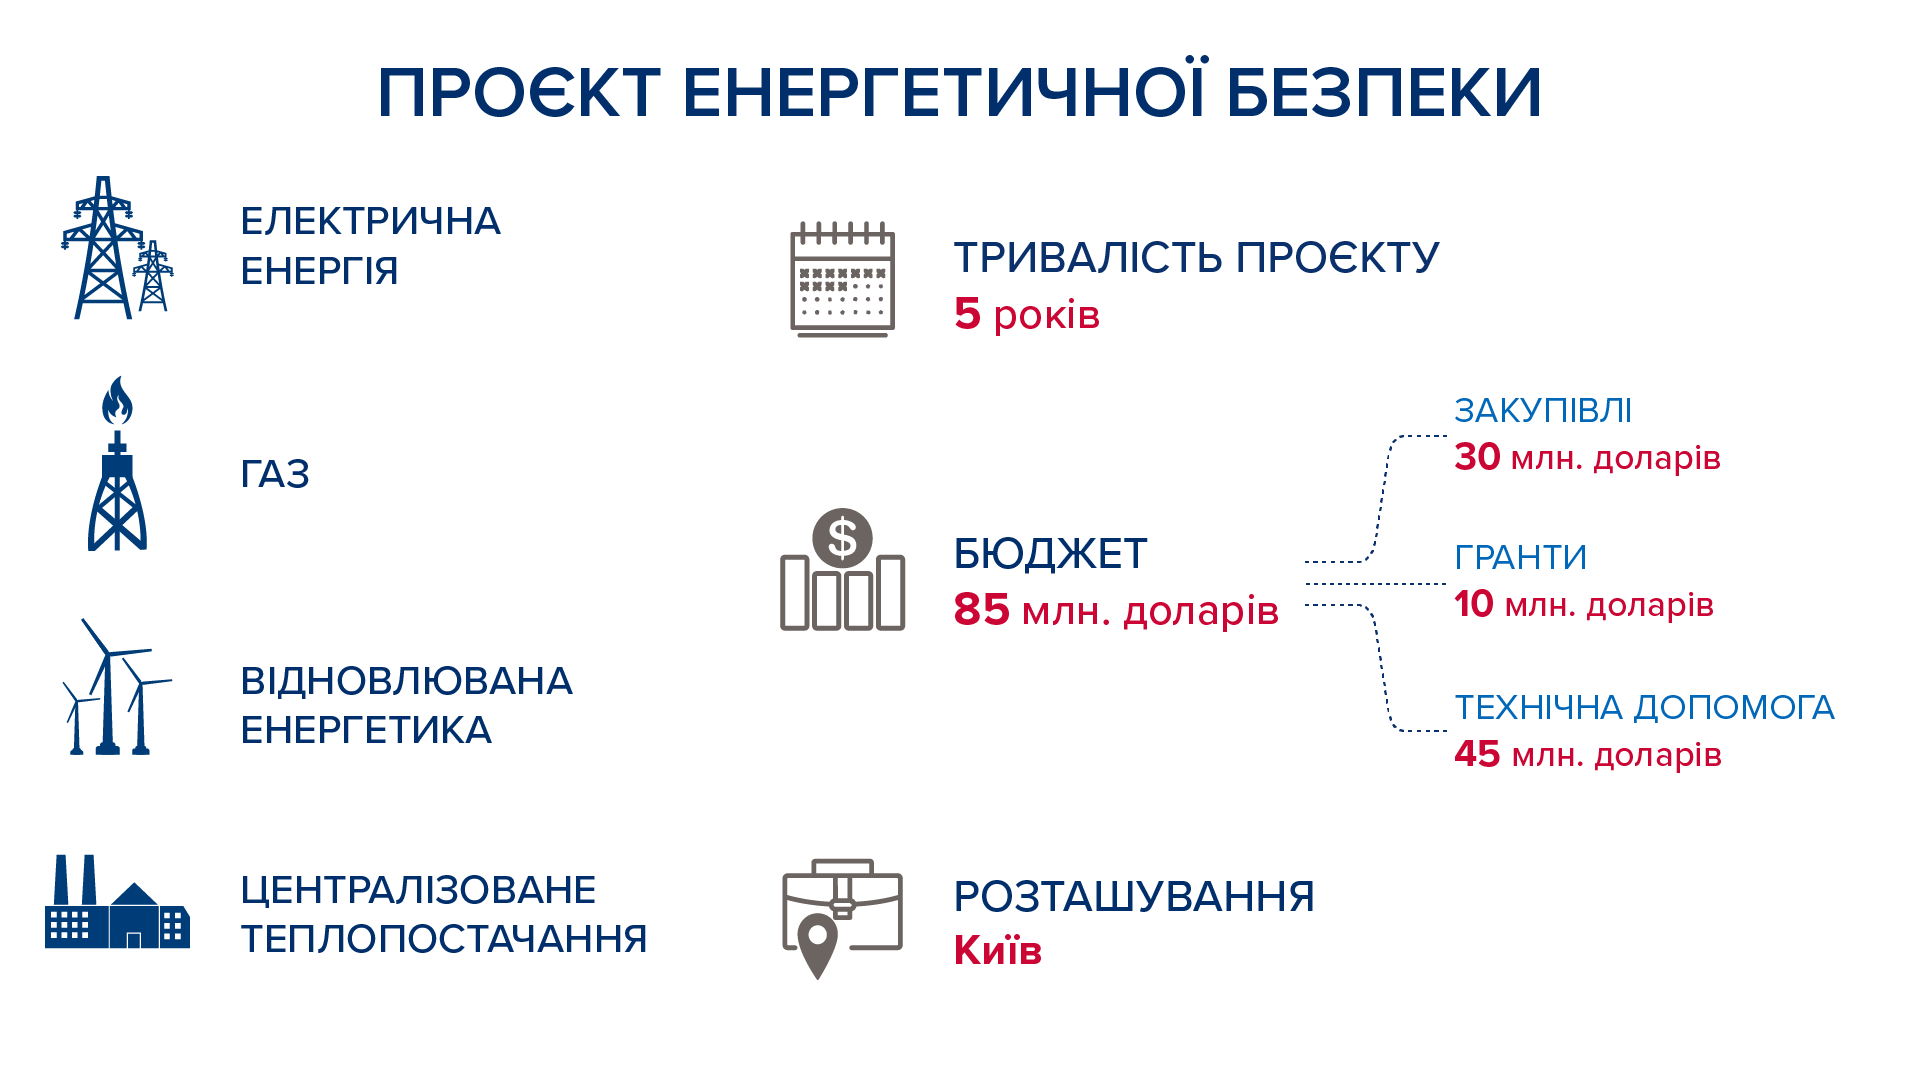 Text in Ukrainian on gray background